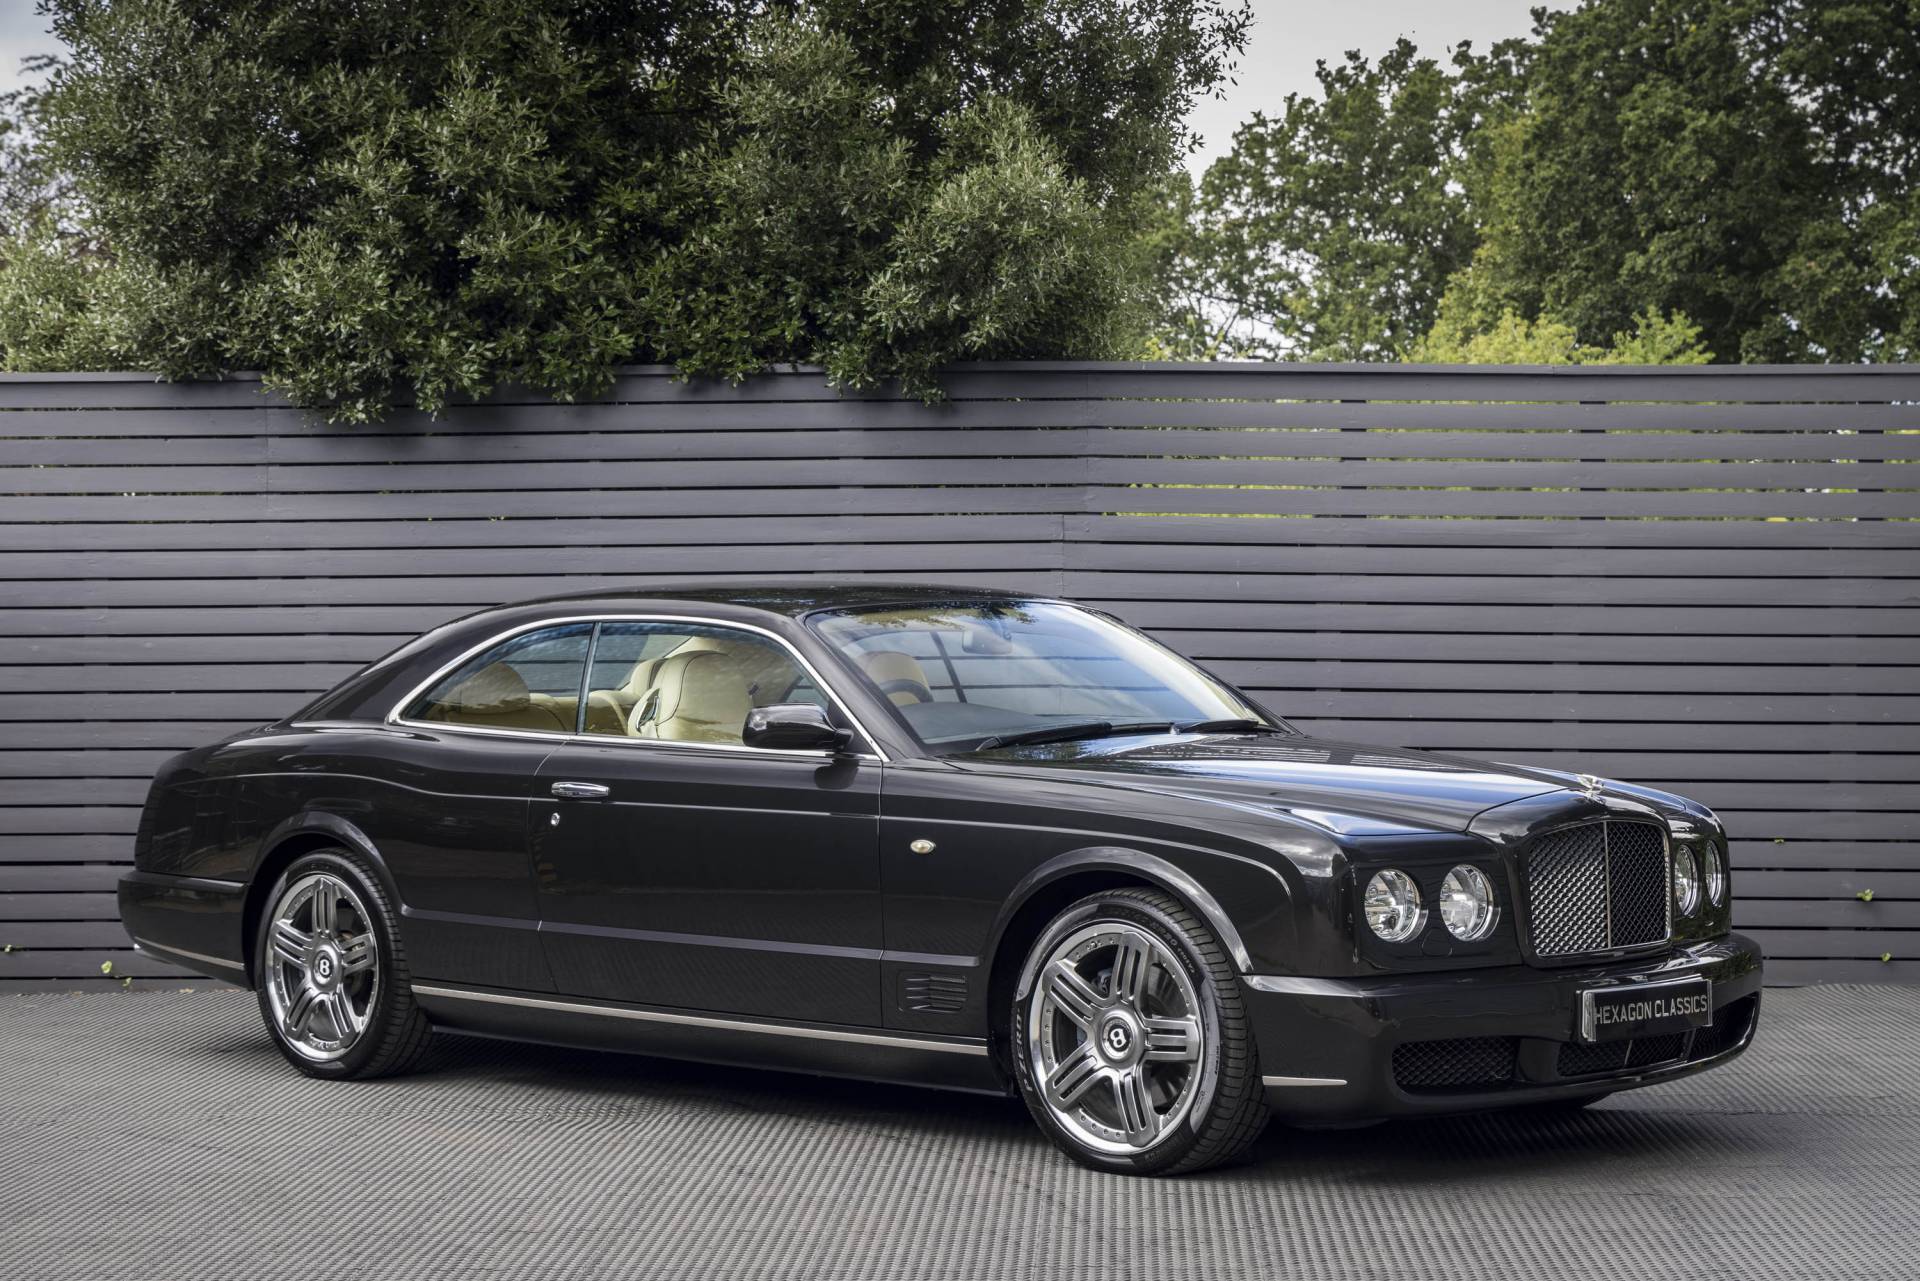 For Sale: Bentley Brooklands (2009) offered for £162,859